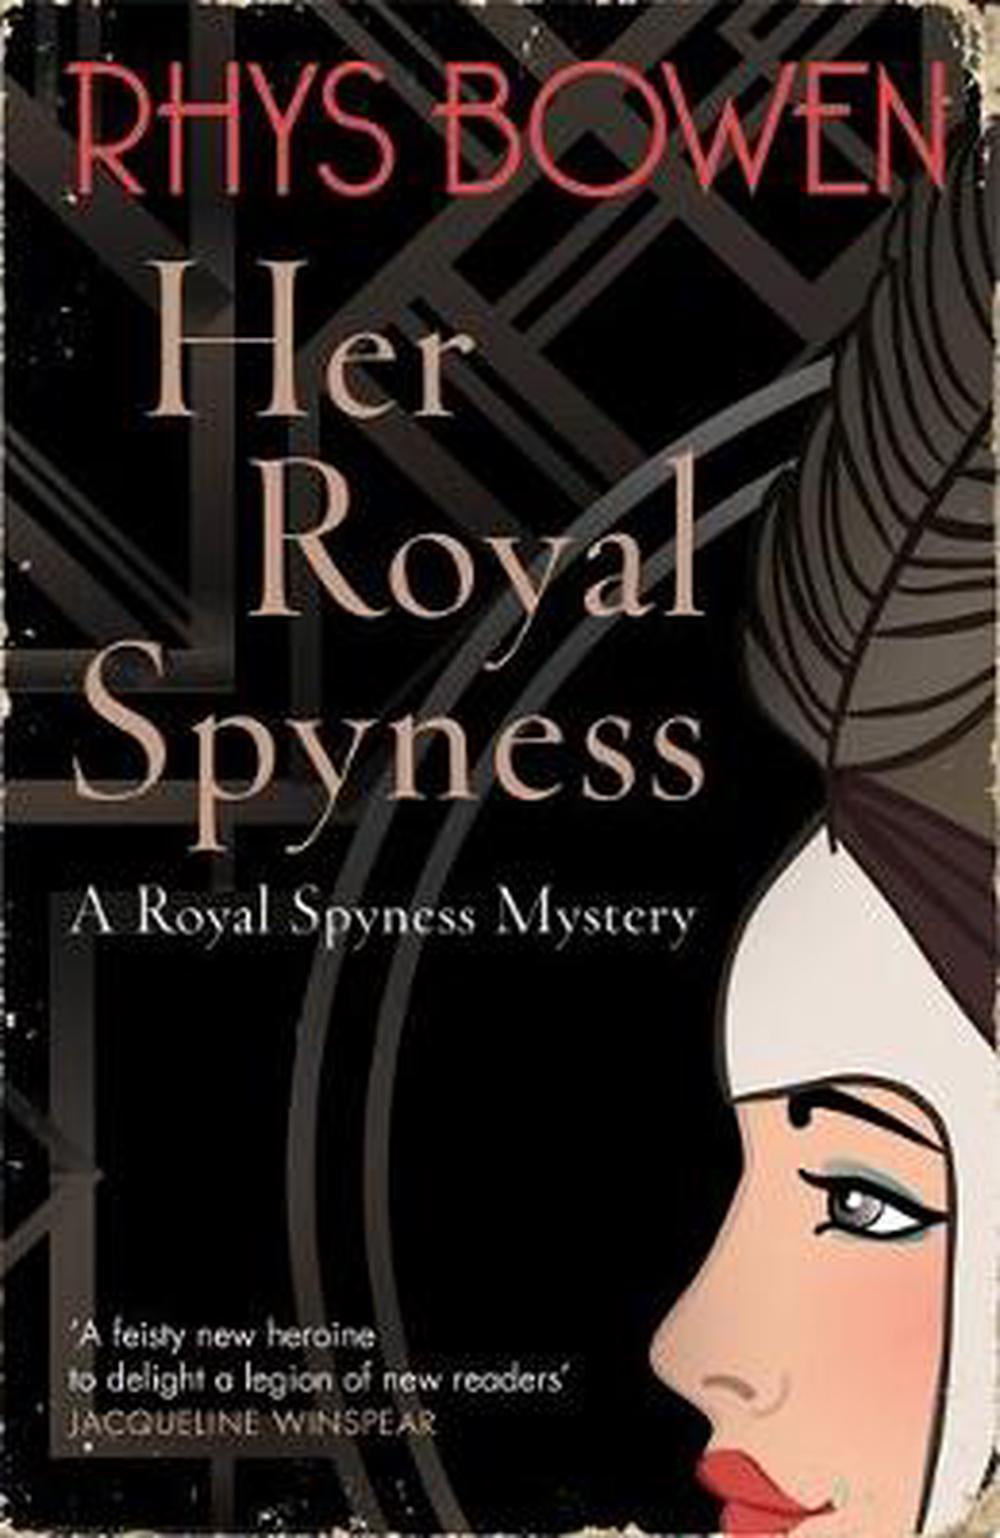 royal spyness series